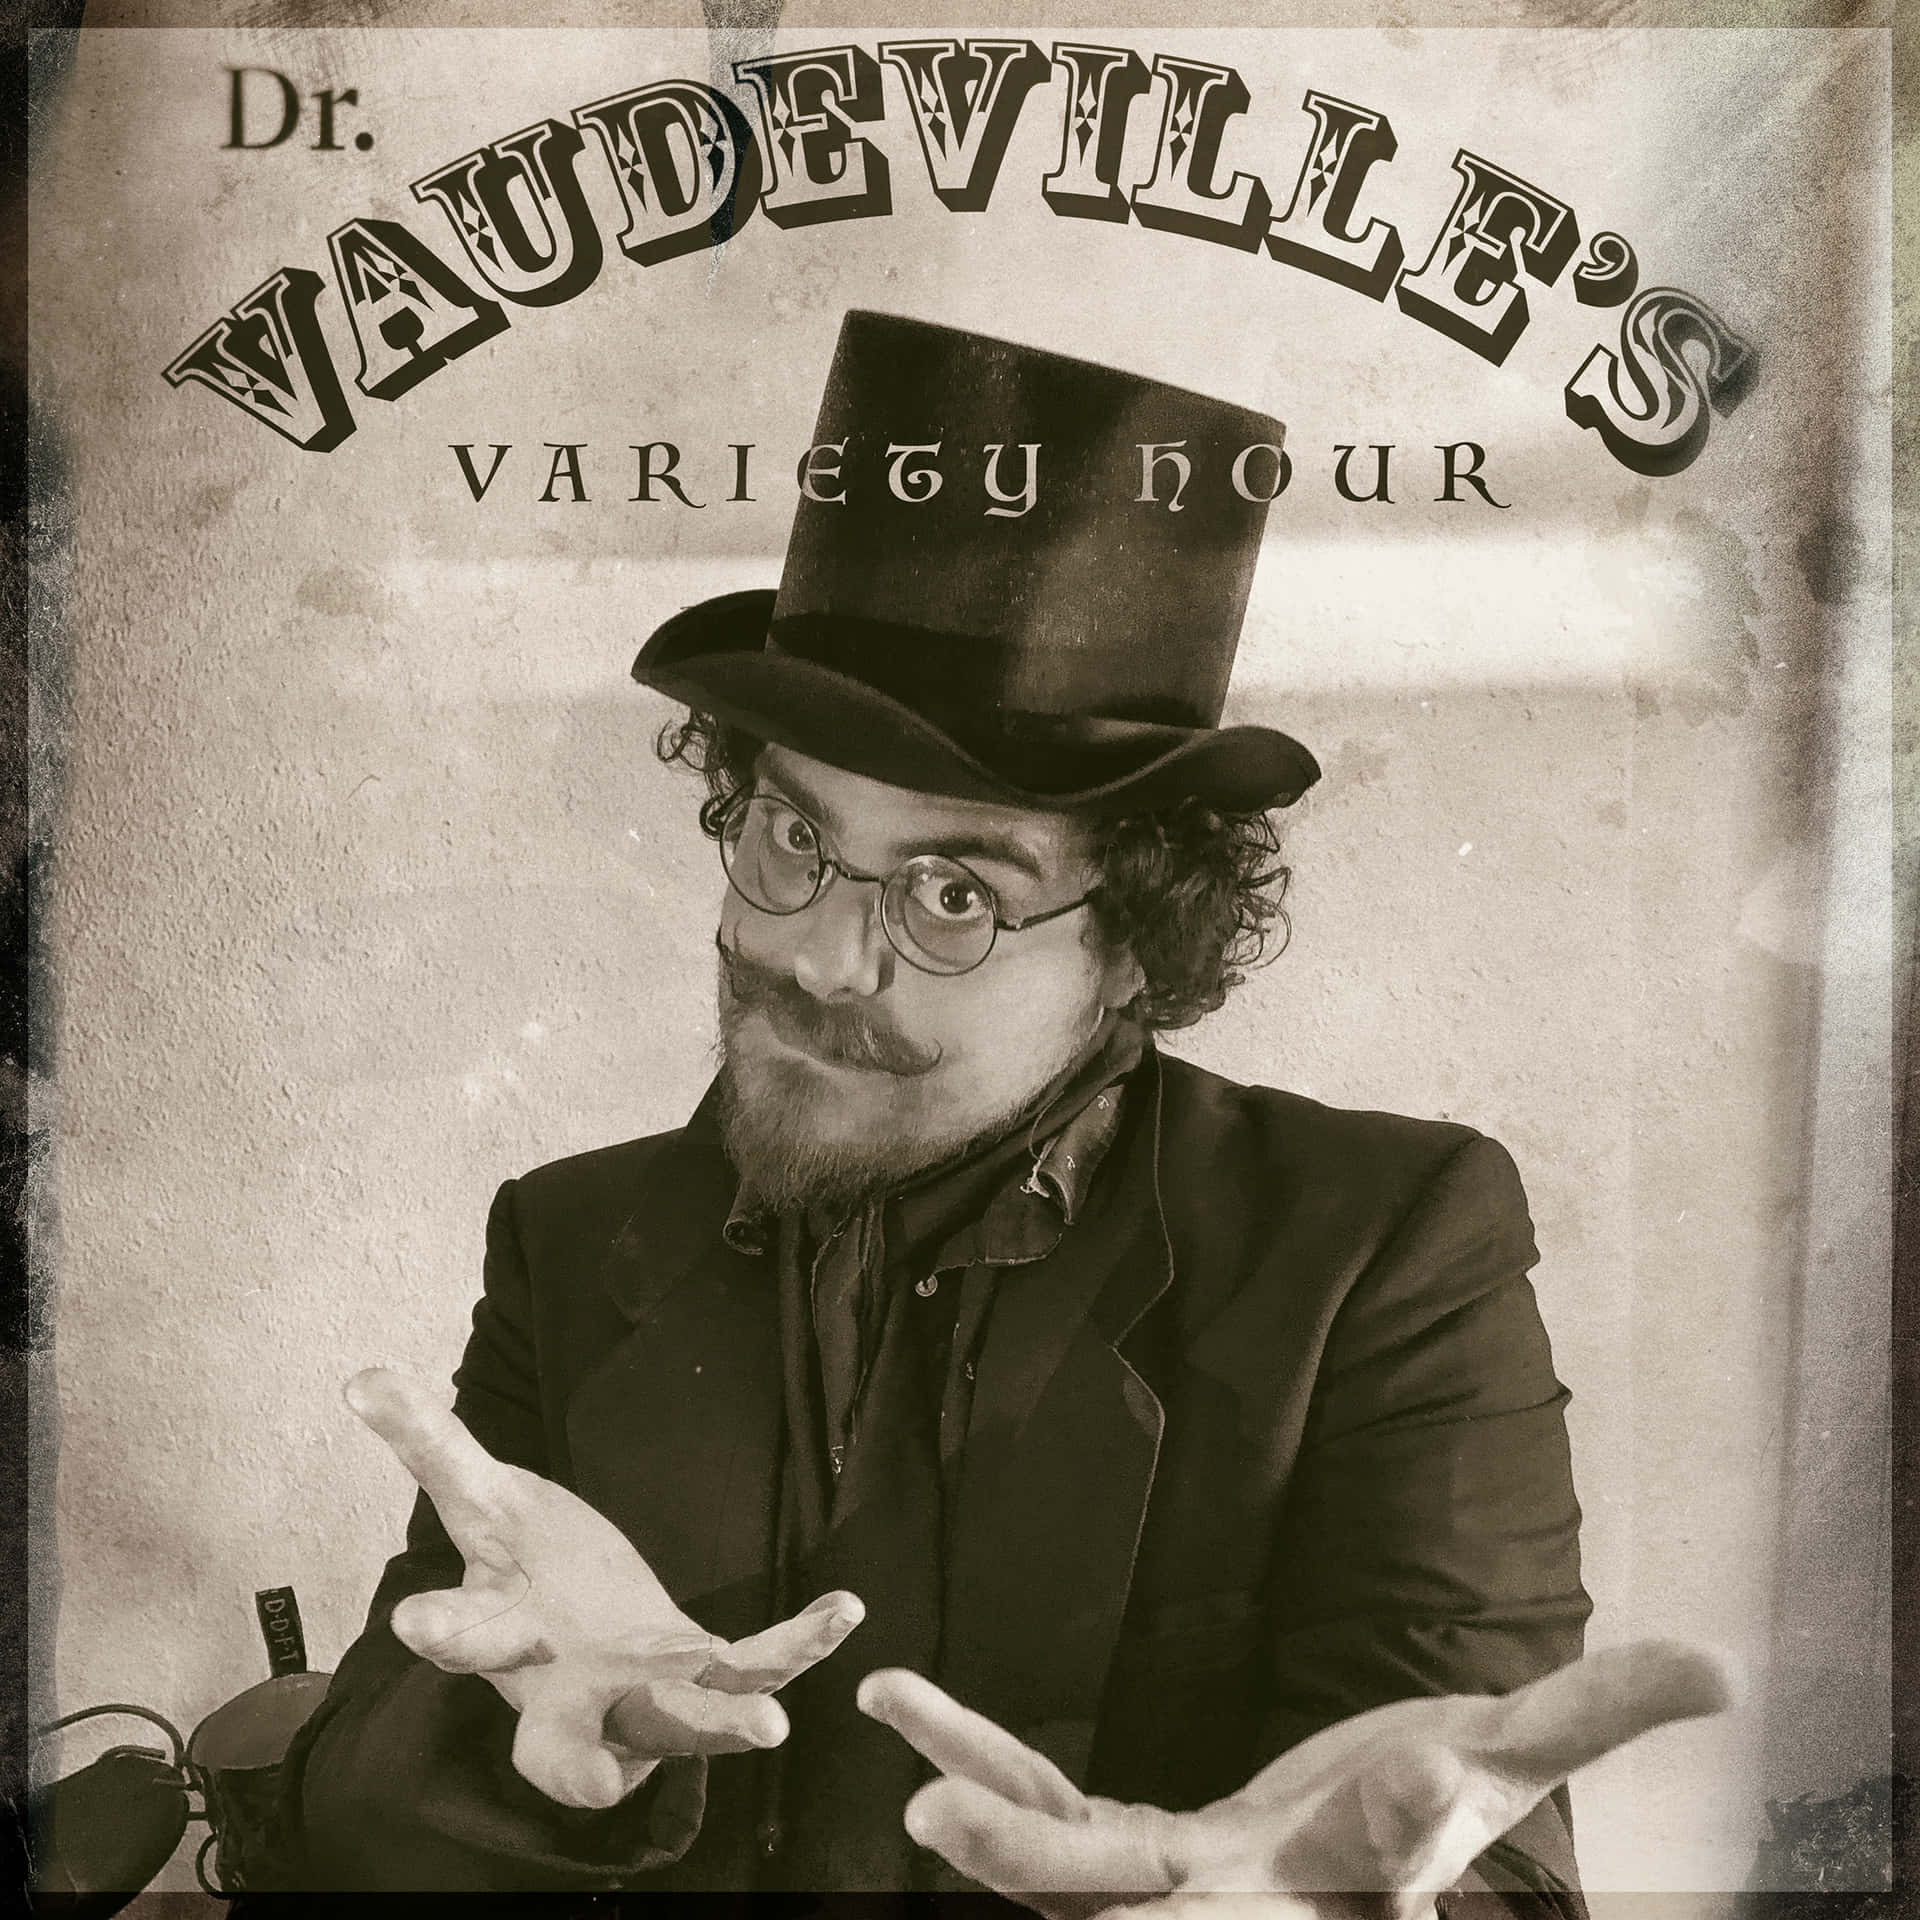 Dr Vaudevilles Variety Hour Poster Wallpaper